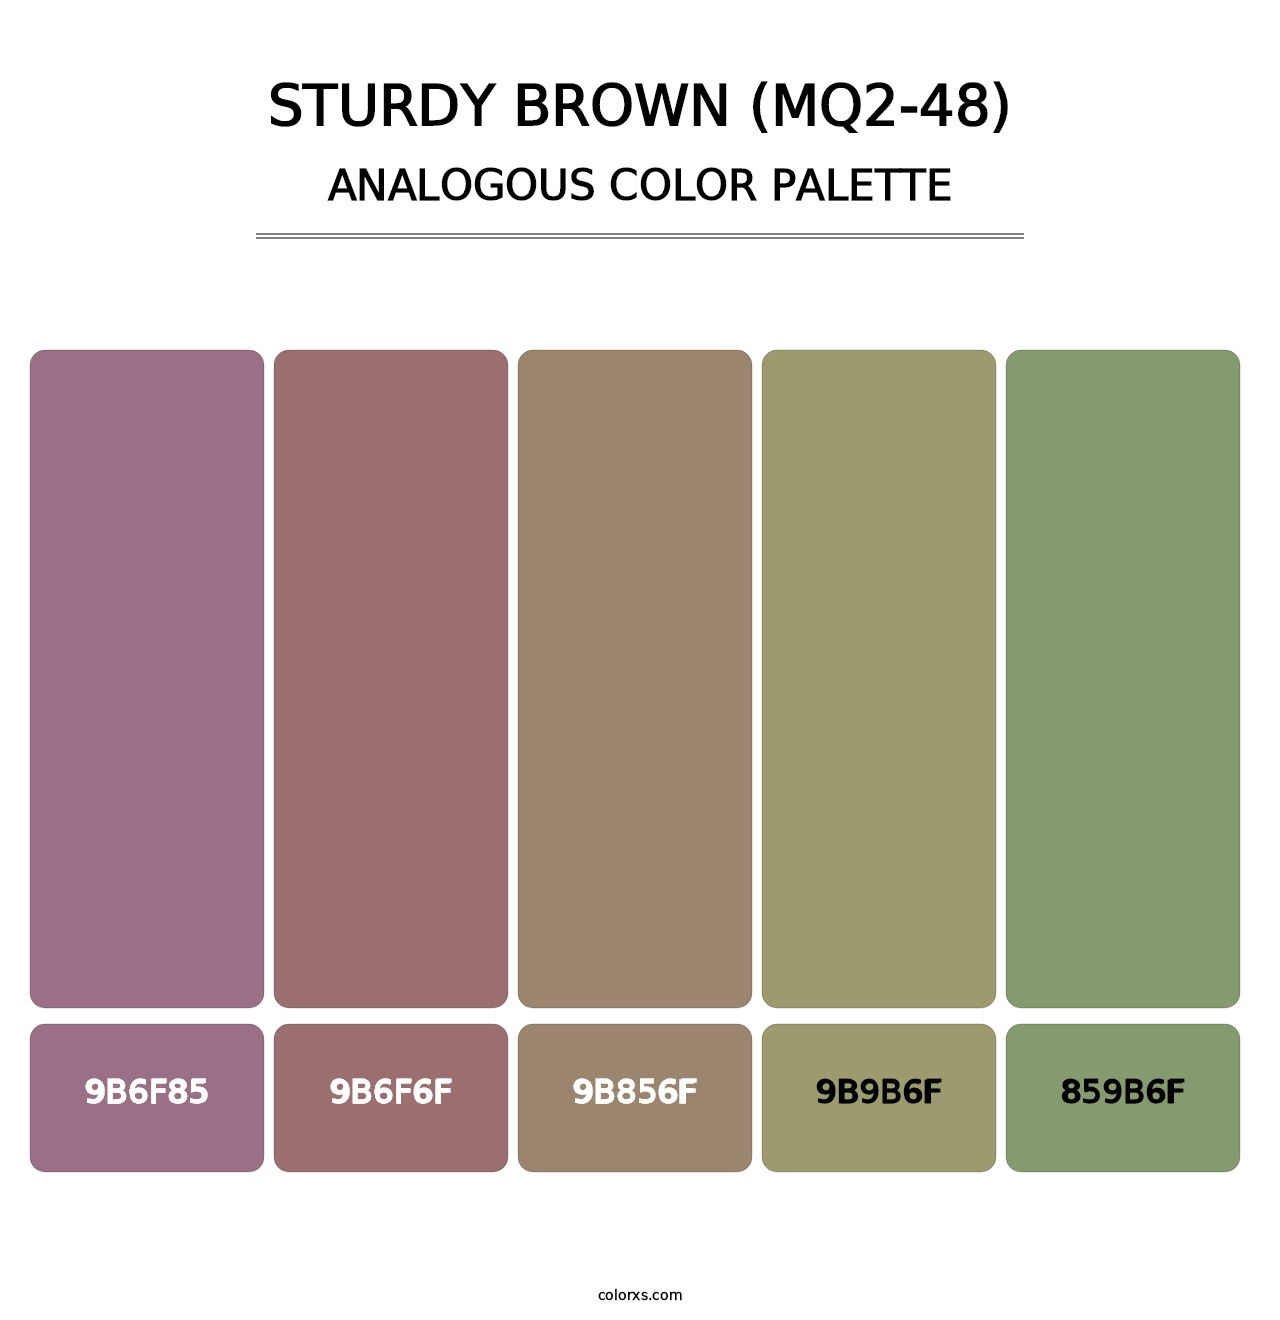 Sturdy Brown (MQ2-48) - Analogous Color Palette